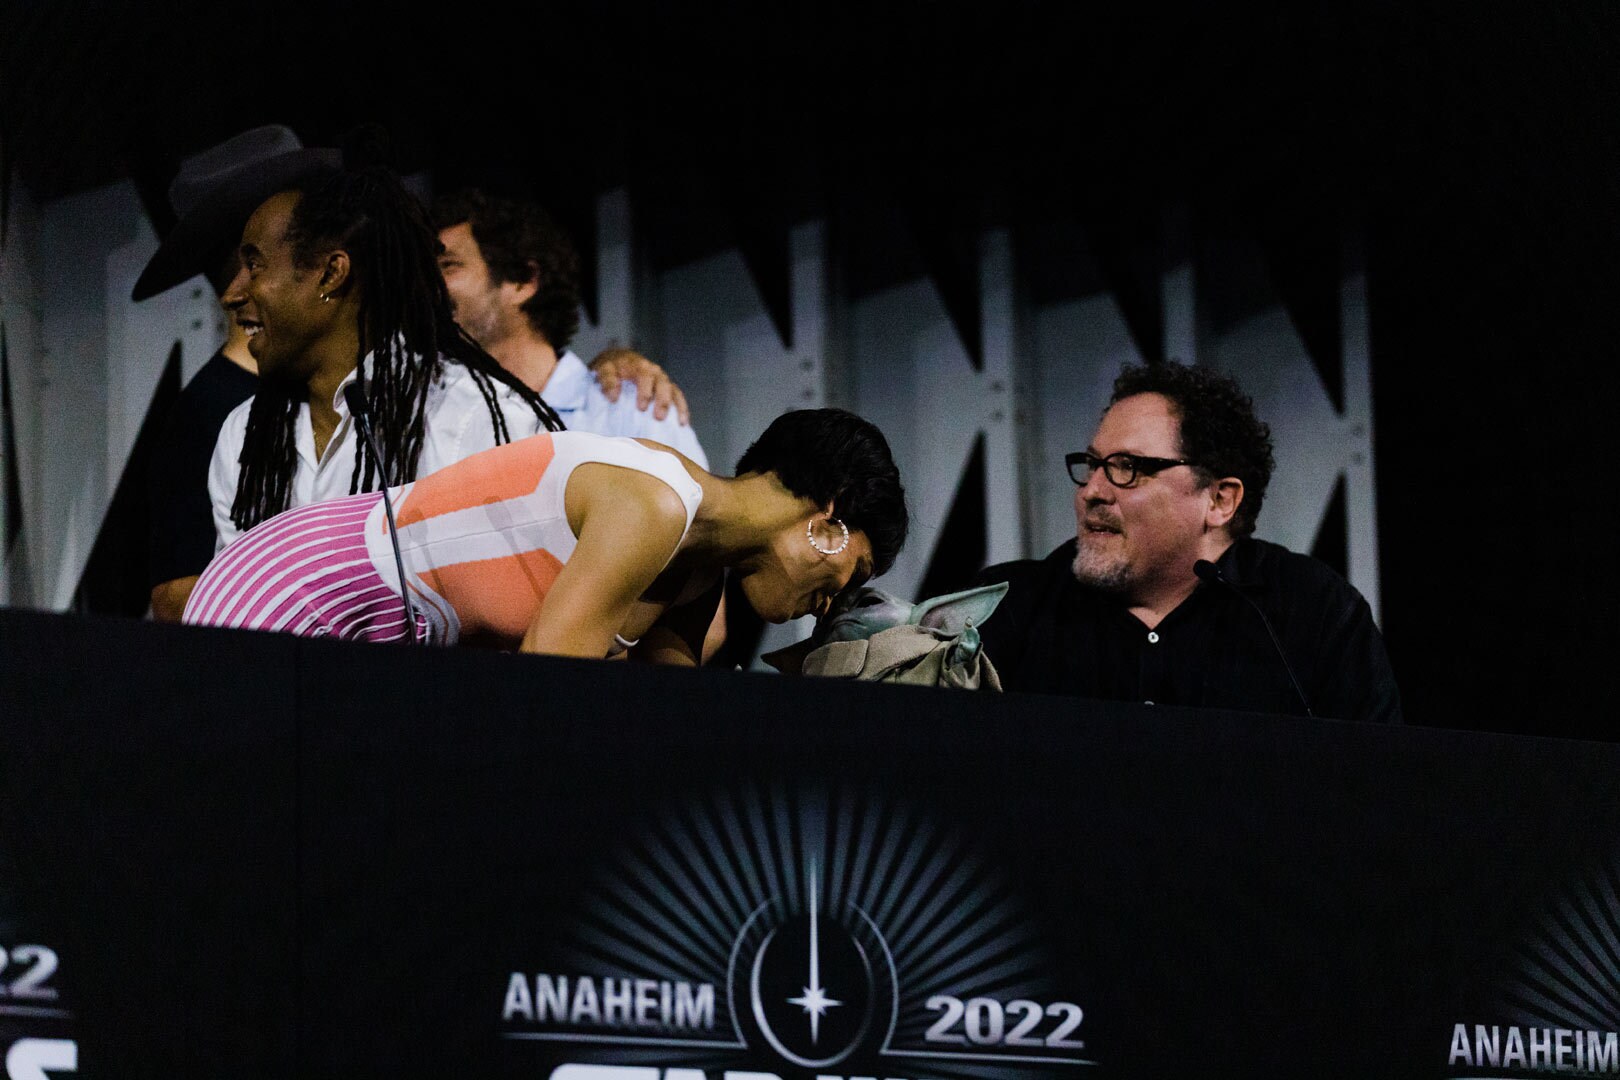 Rosario Dawson and Grogu touching foreheads at the Mando+ panel